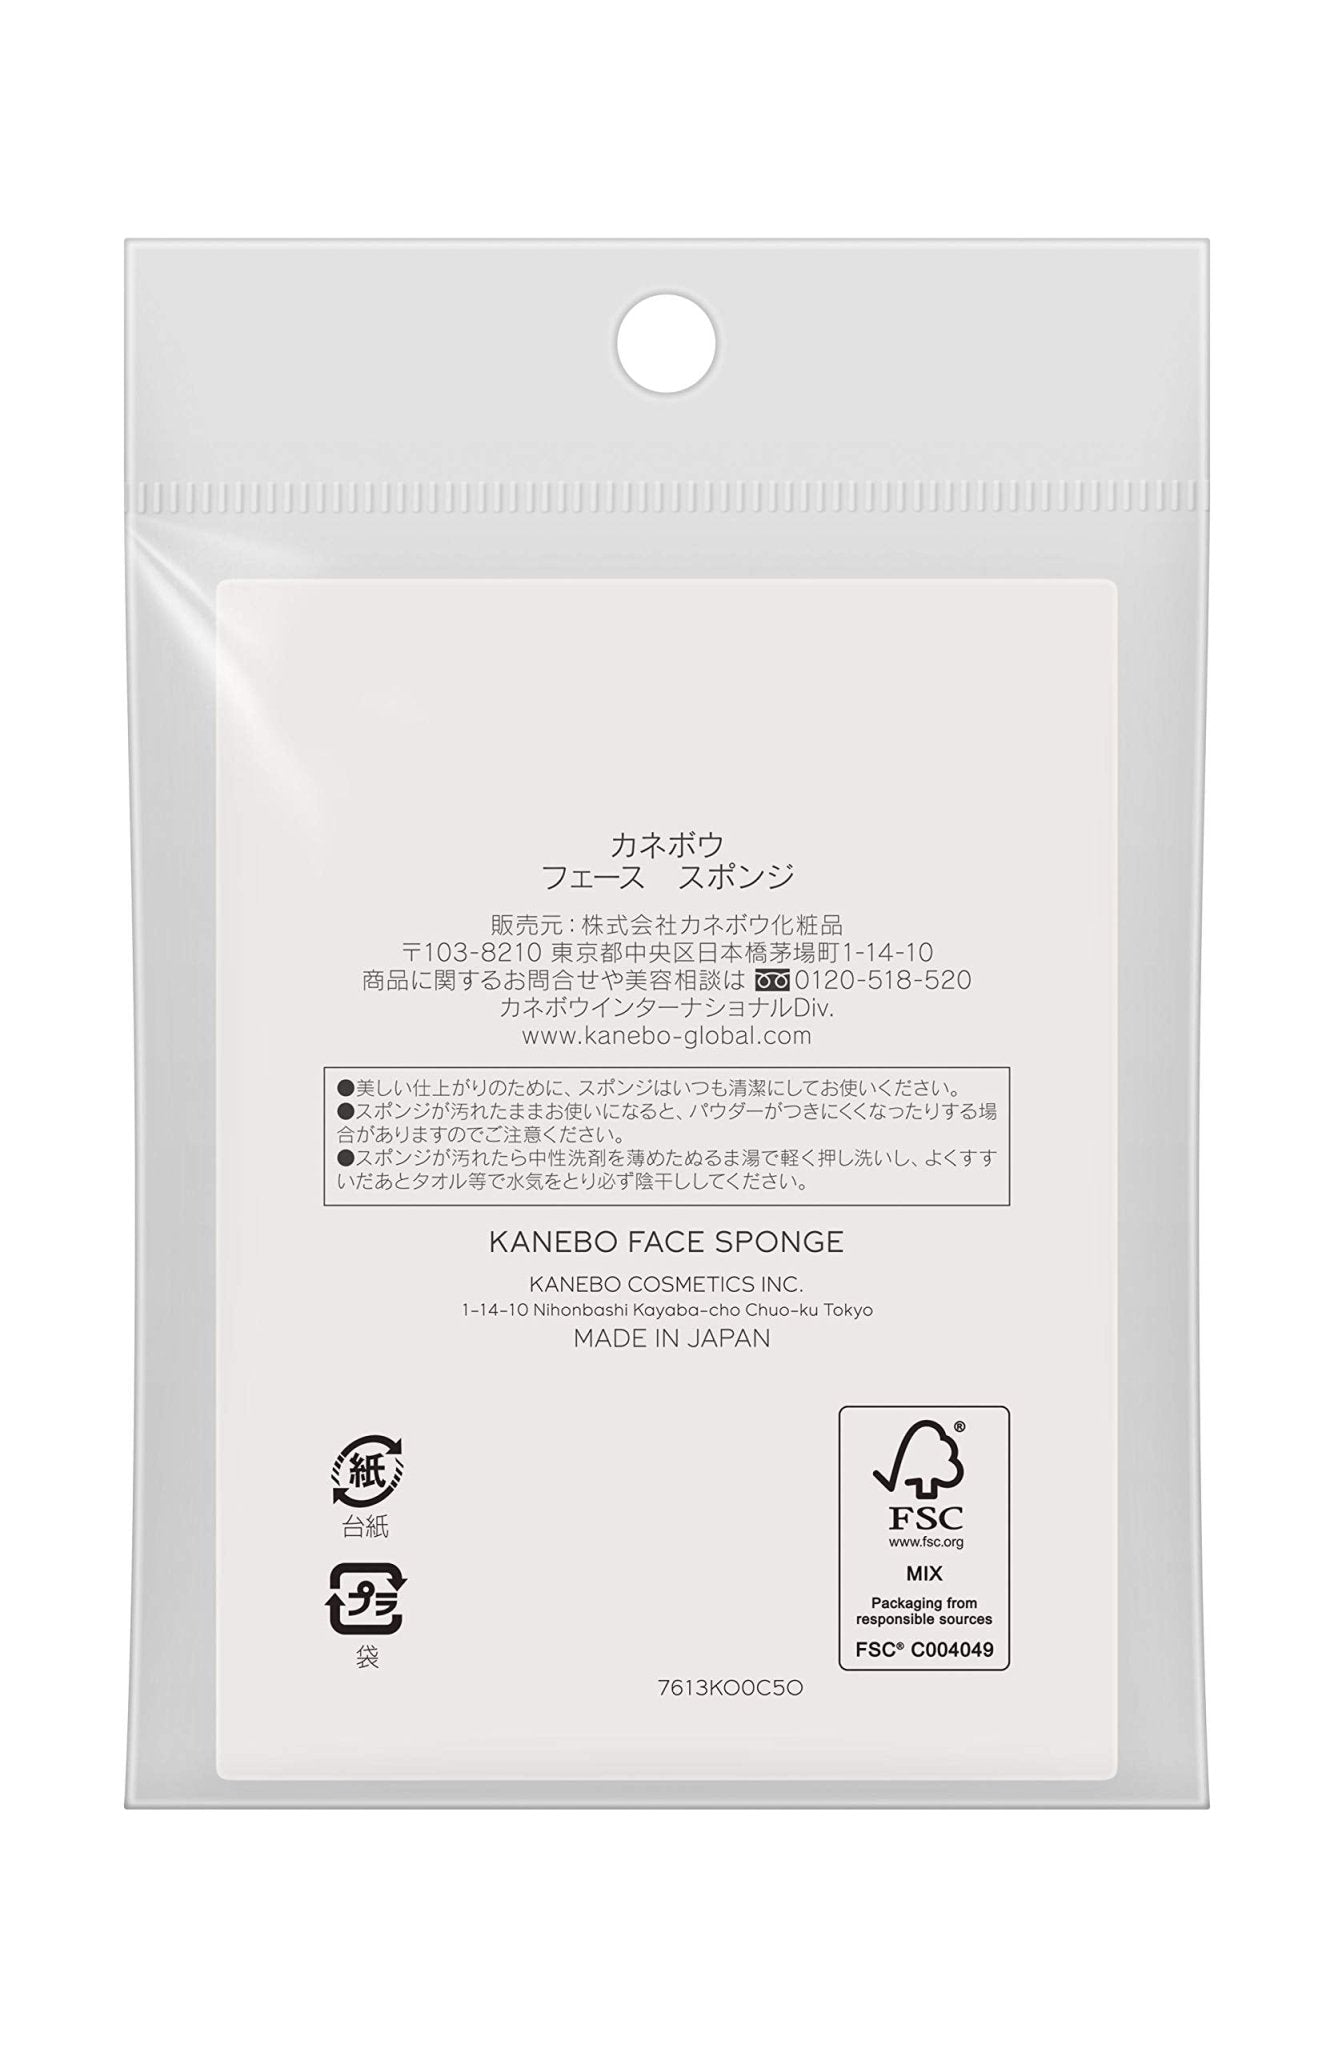 Kanebo Premium Face Sponge - High - Quality 1 Piece Makeup Tool